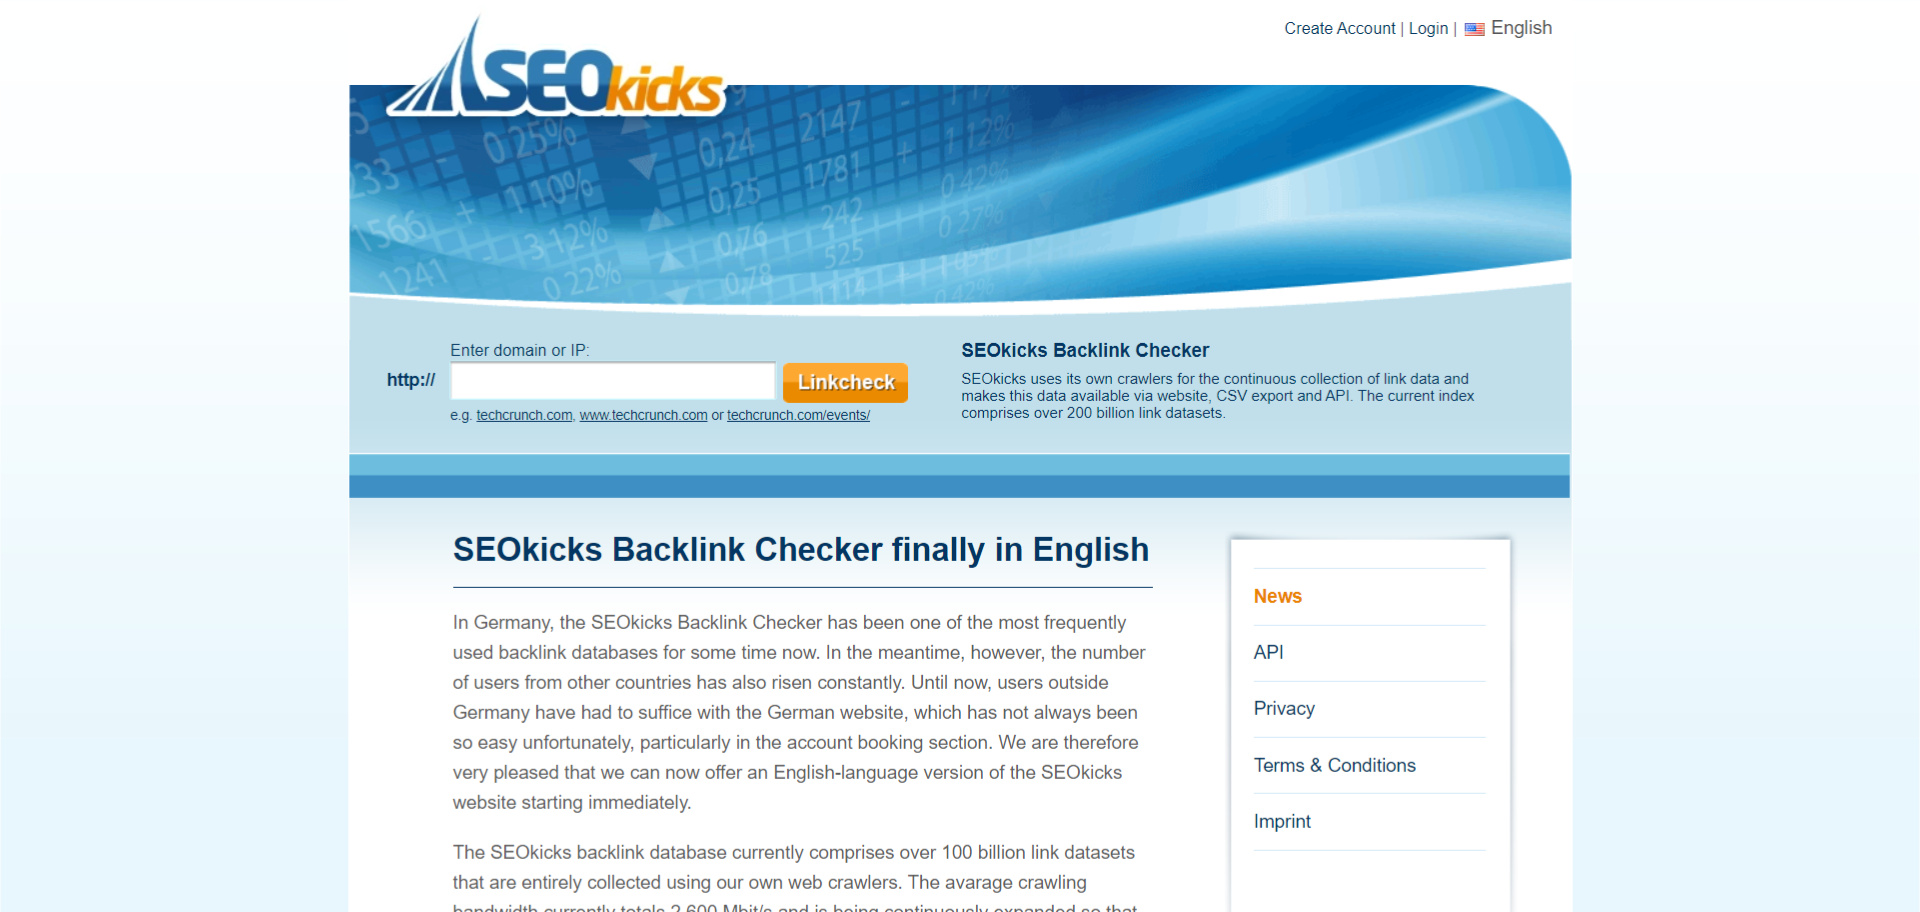 SEOkicks Backlink Checker Tool